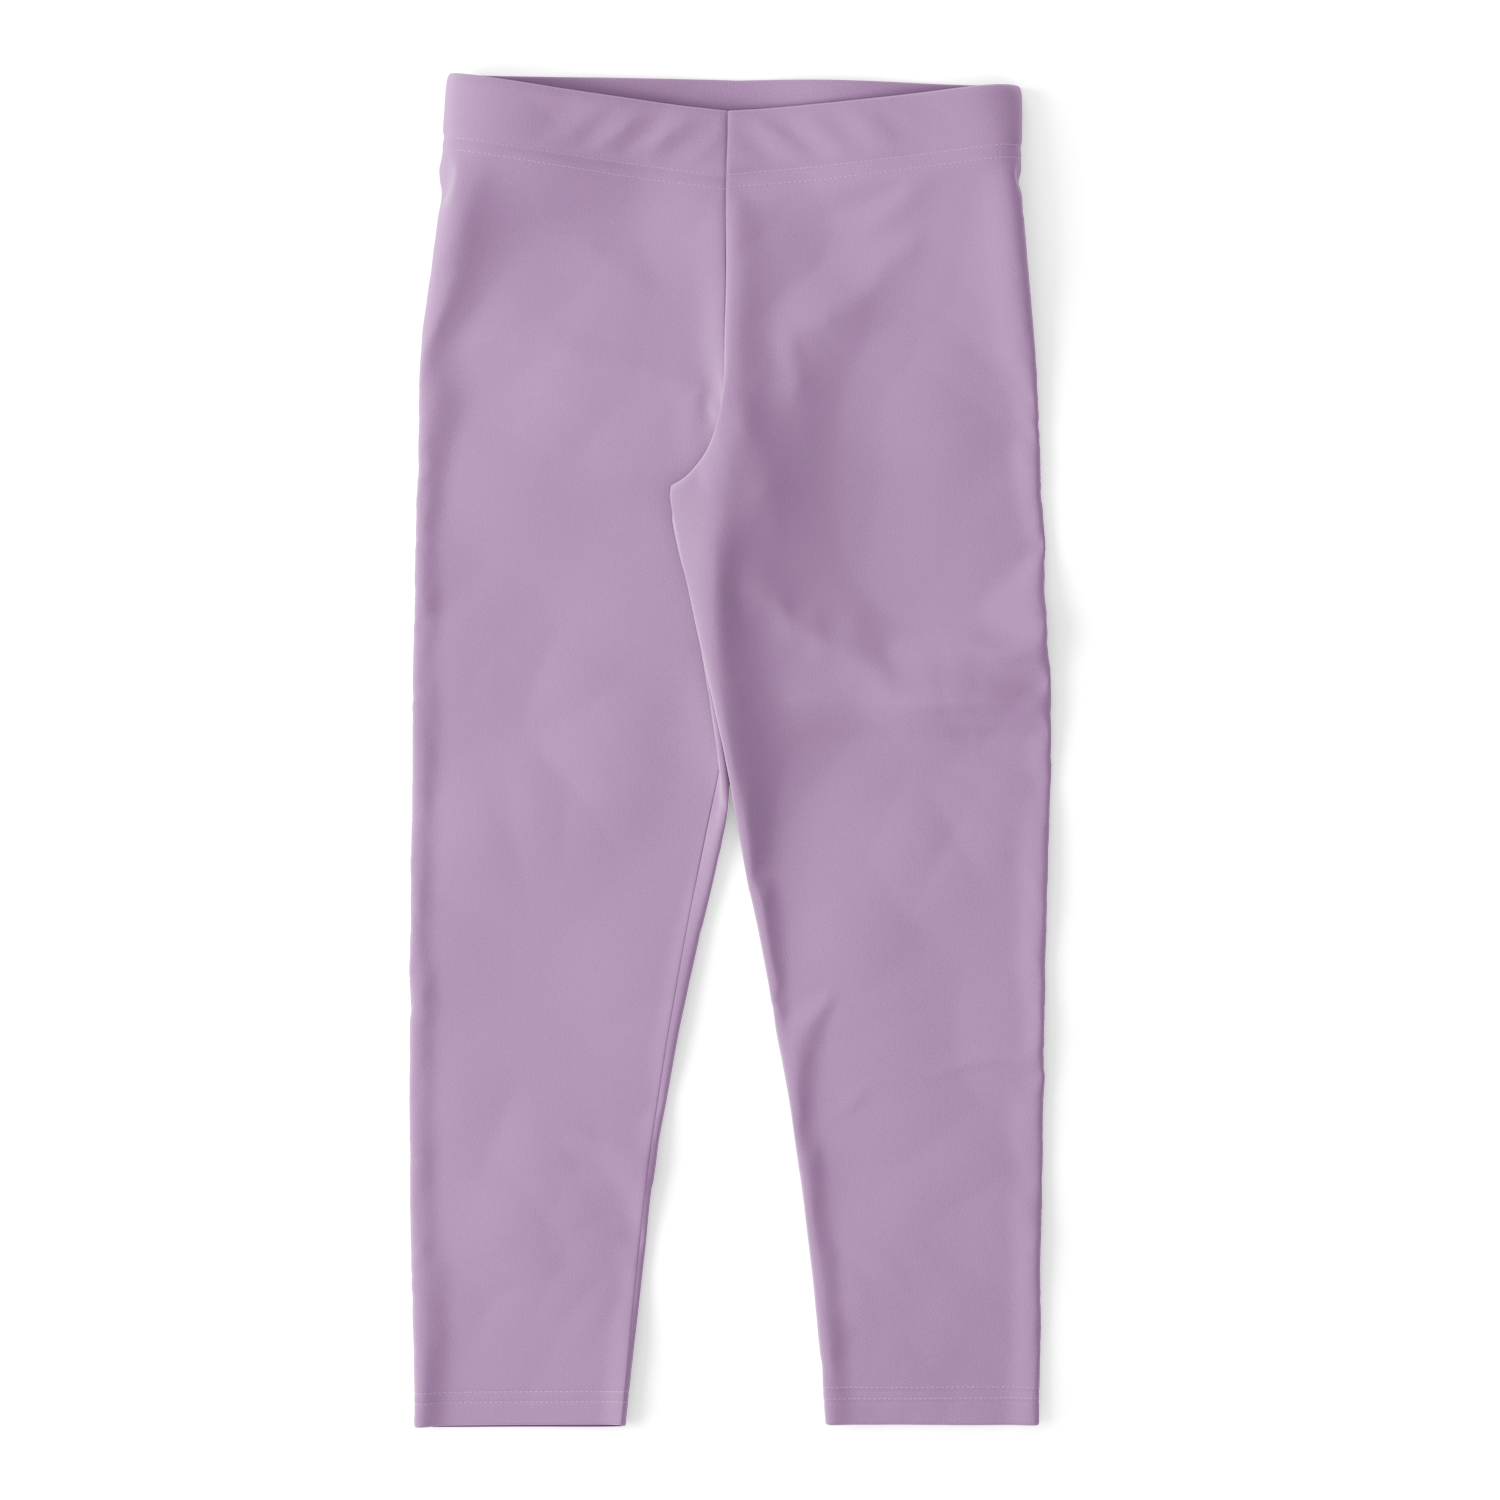 Faded Purple Capri Leggings